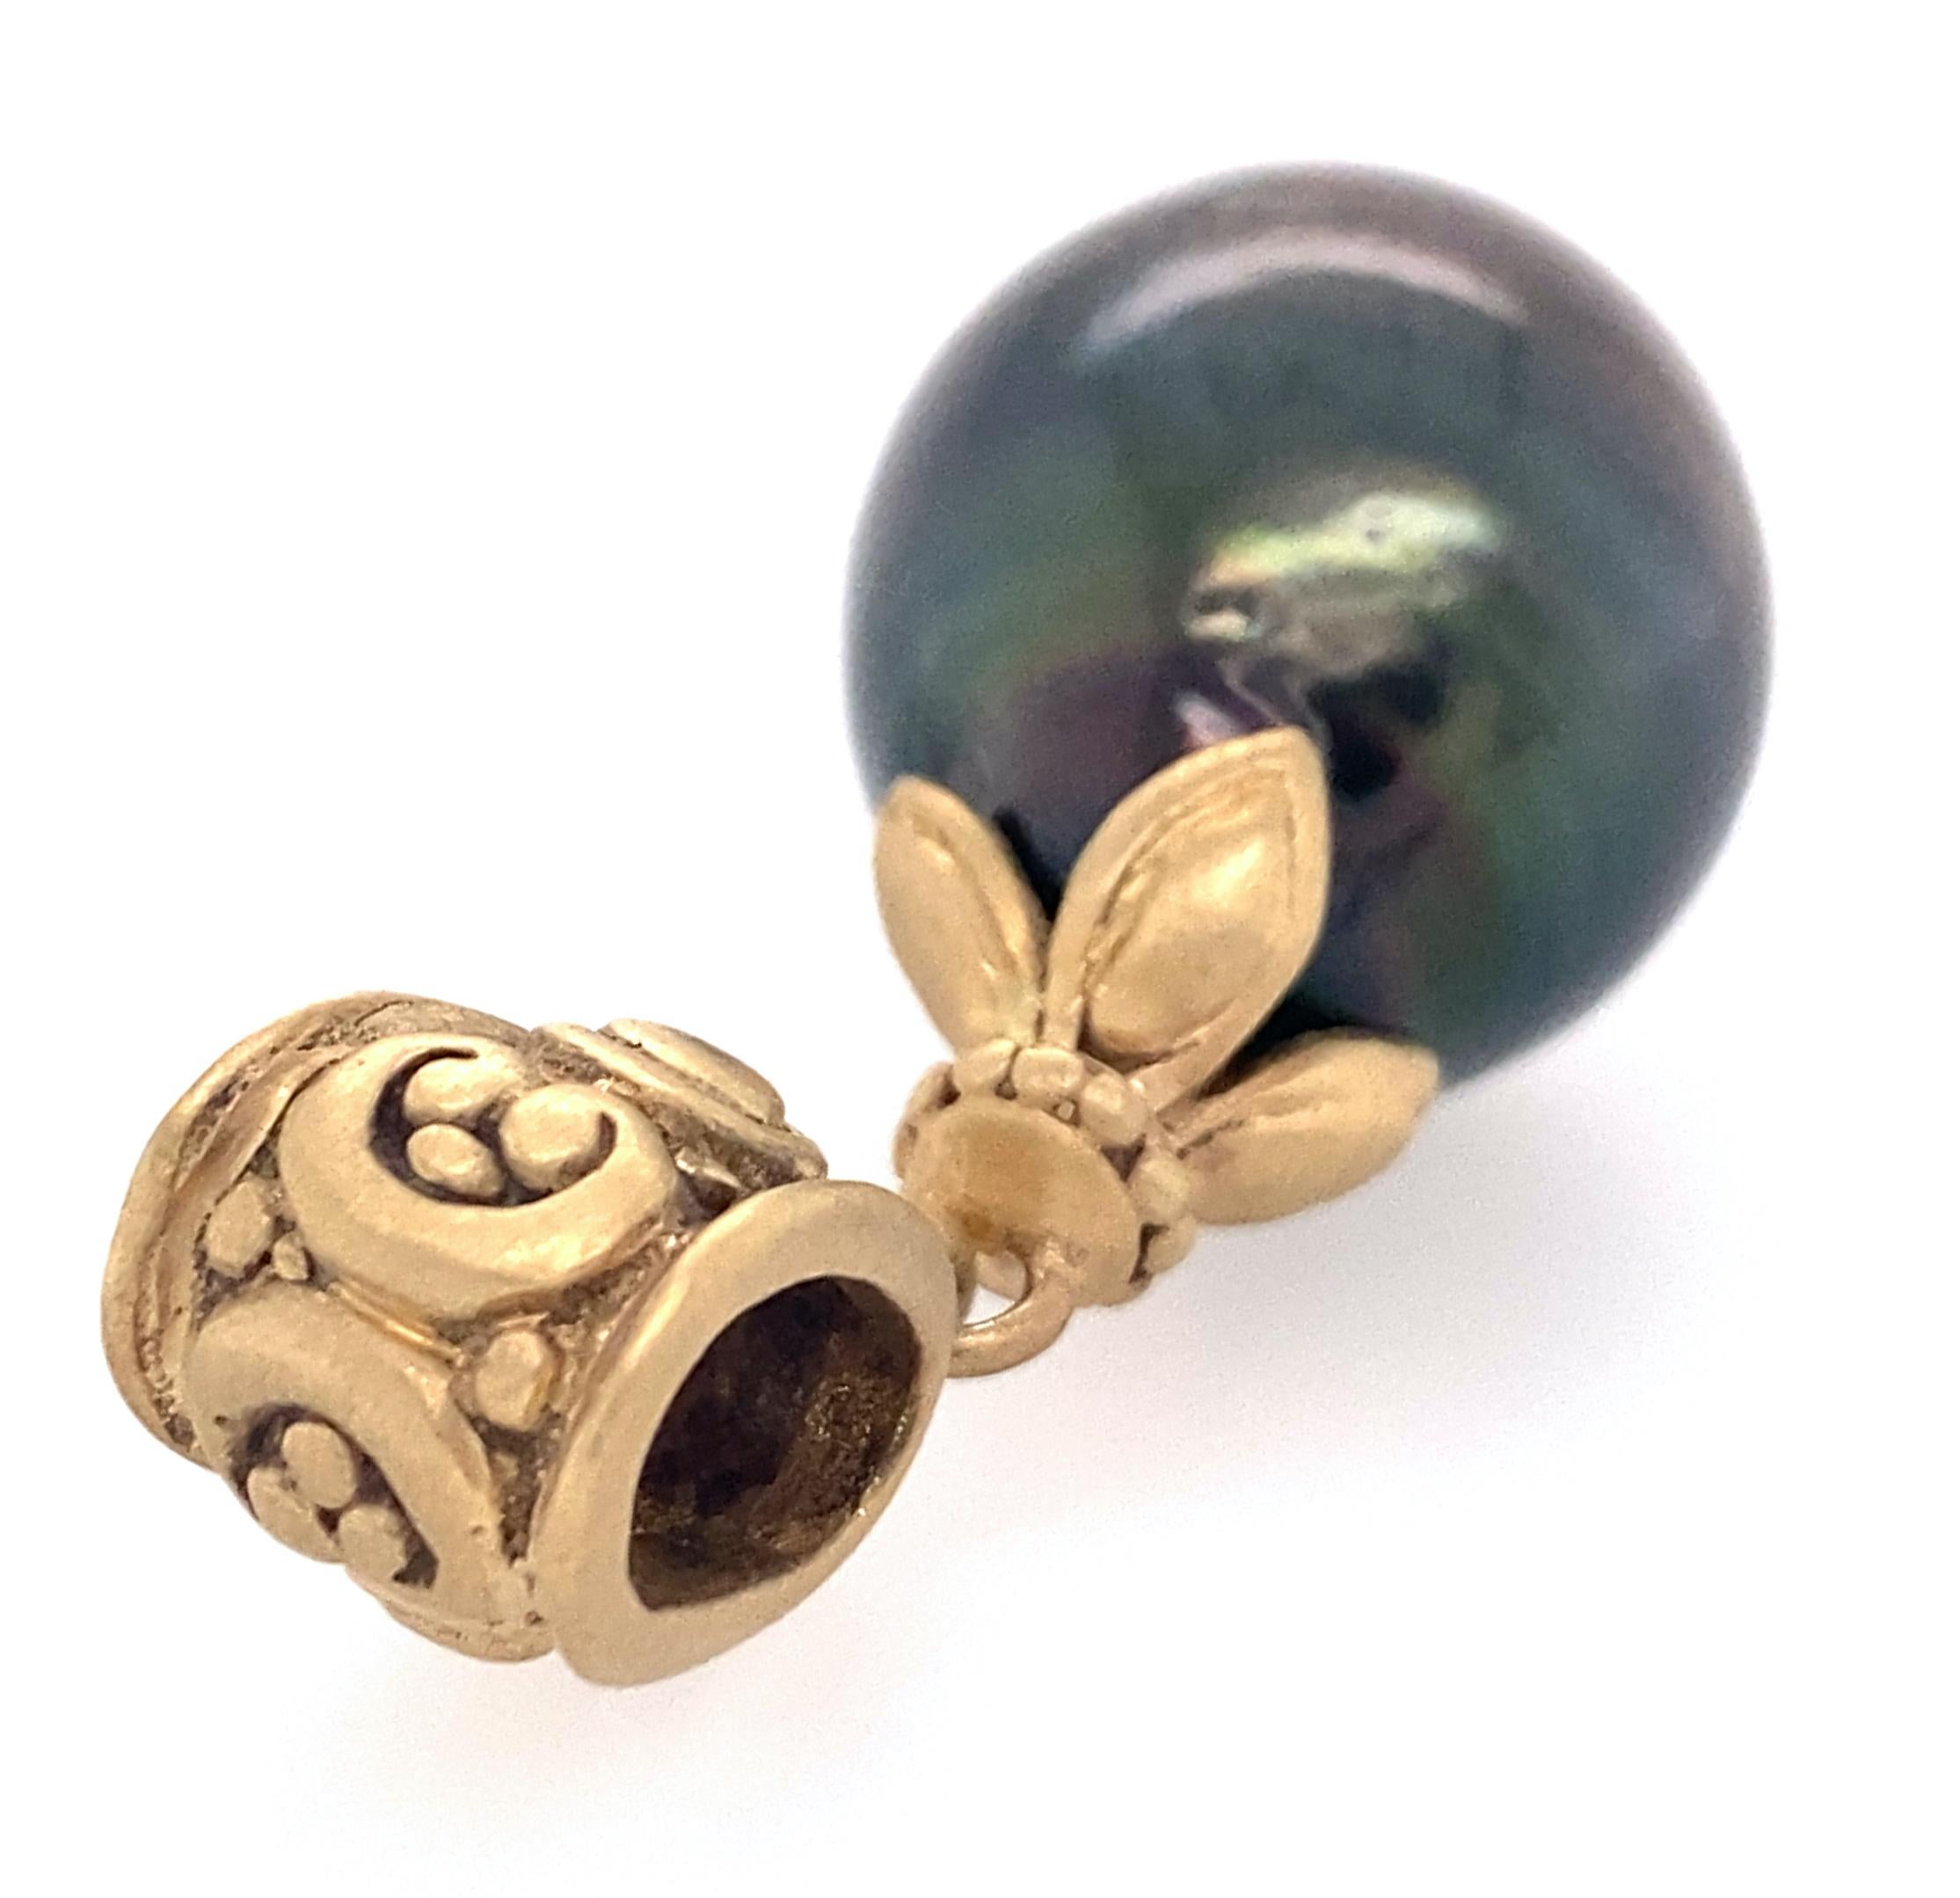 Baroque 15mm Tahitian Black Pearl Pendant or Fob in 18 Karat Yellow Gold 1